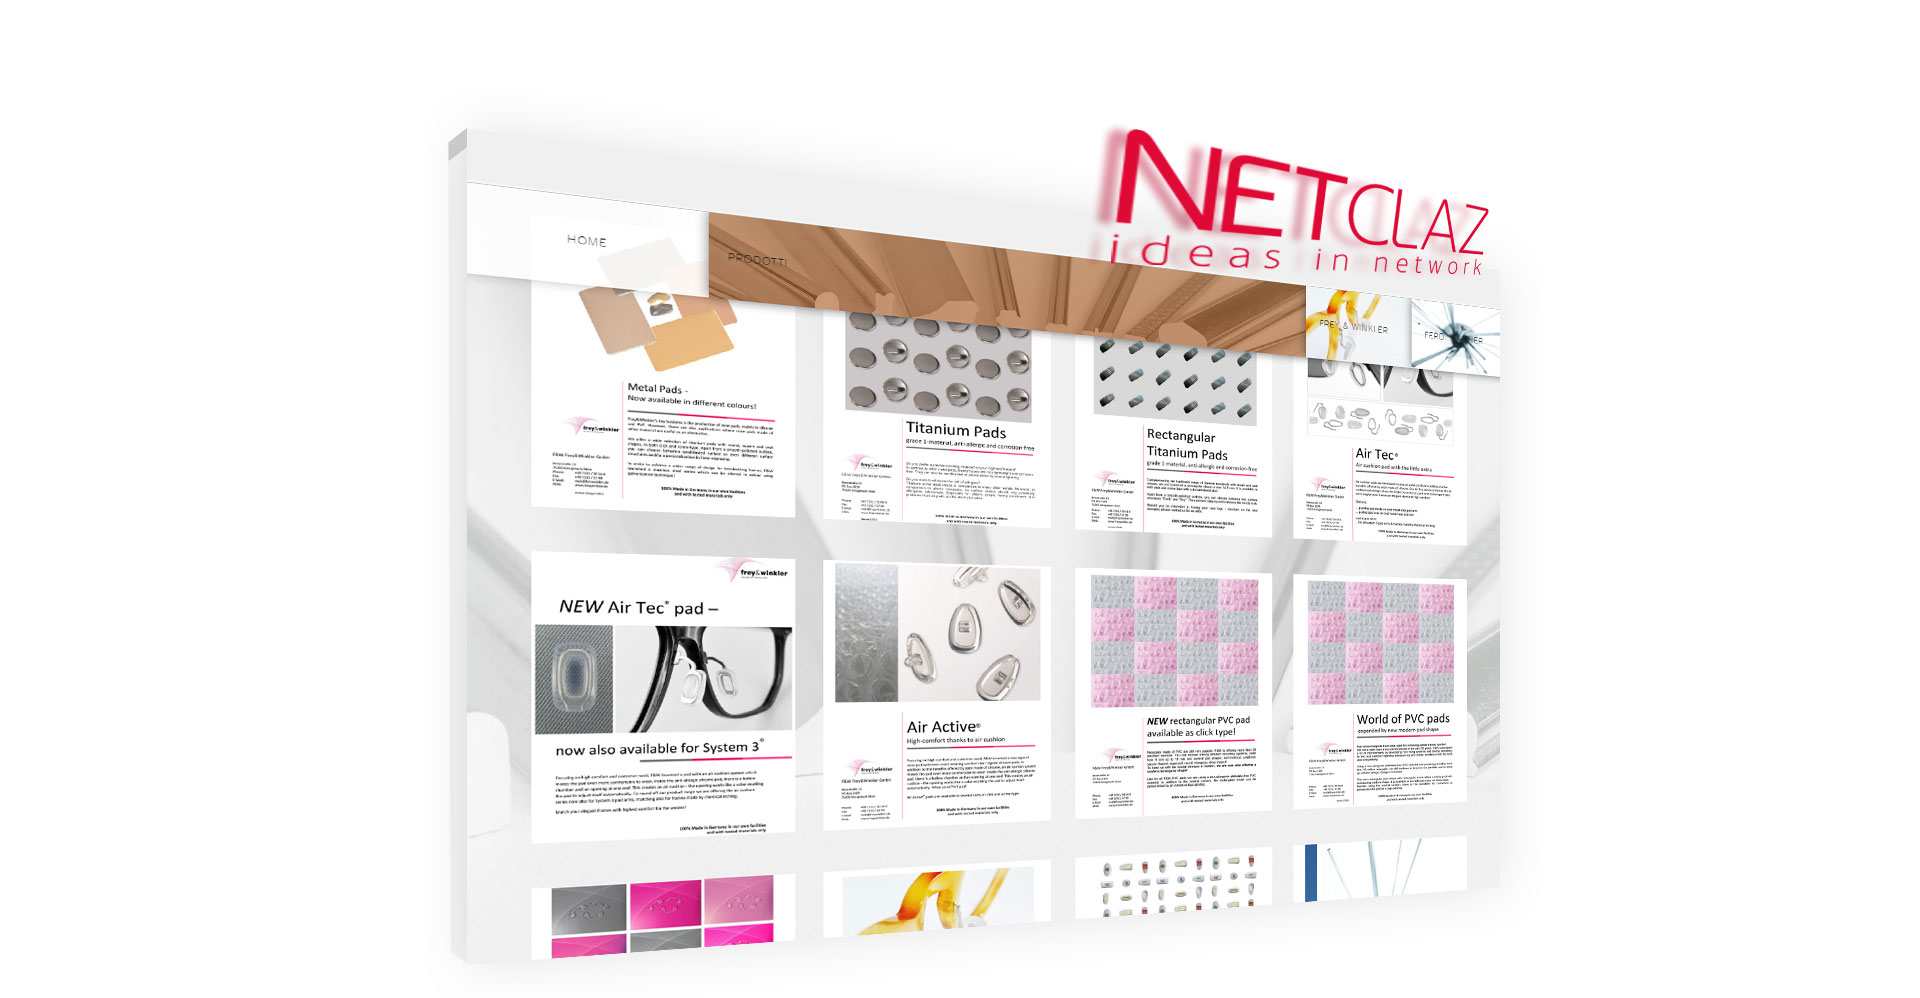 Web site: Netclaz srl